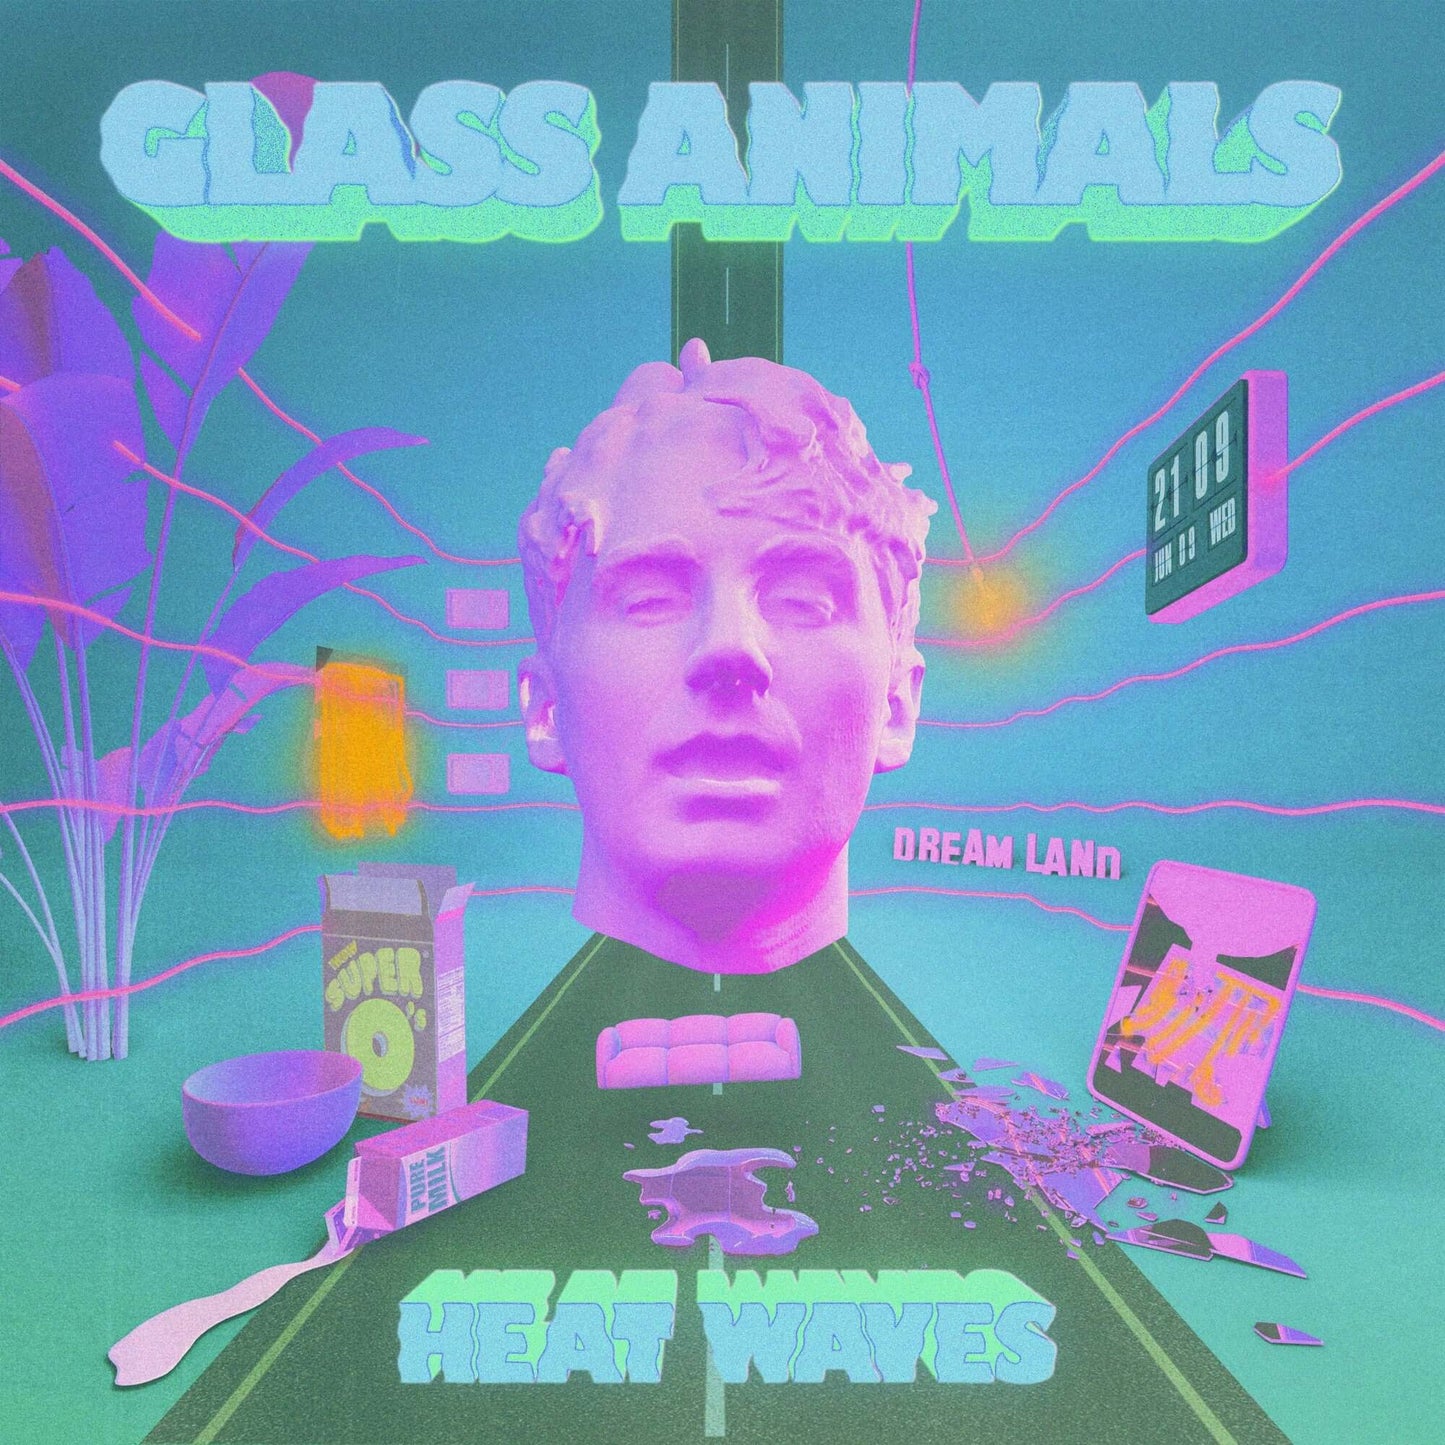 Glass Animals - Heat Waves (Studio Acapella)